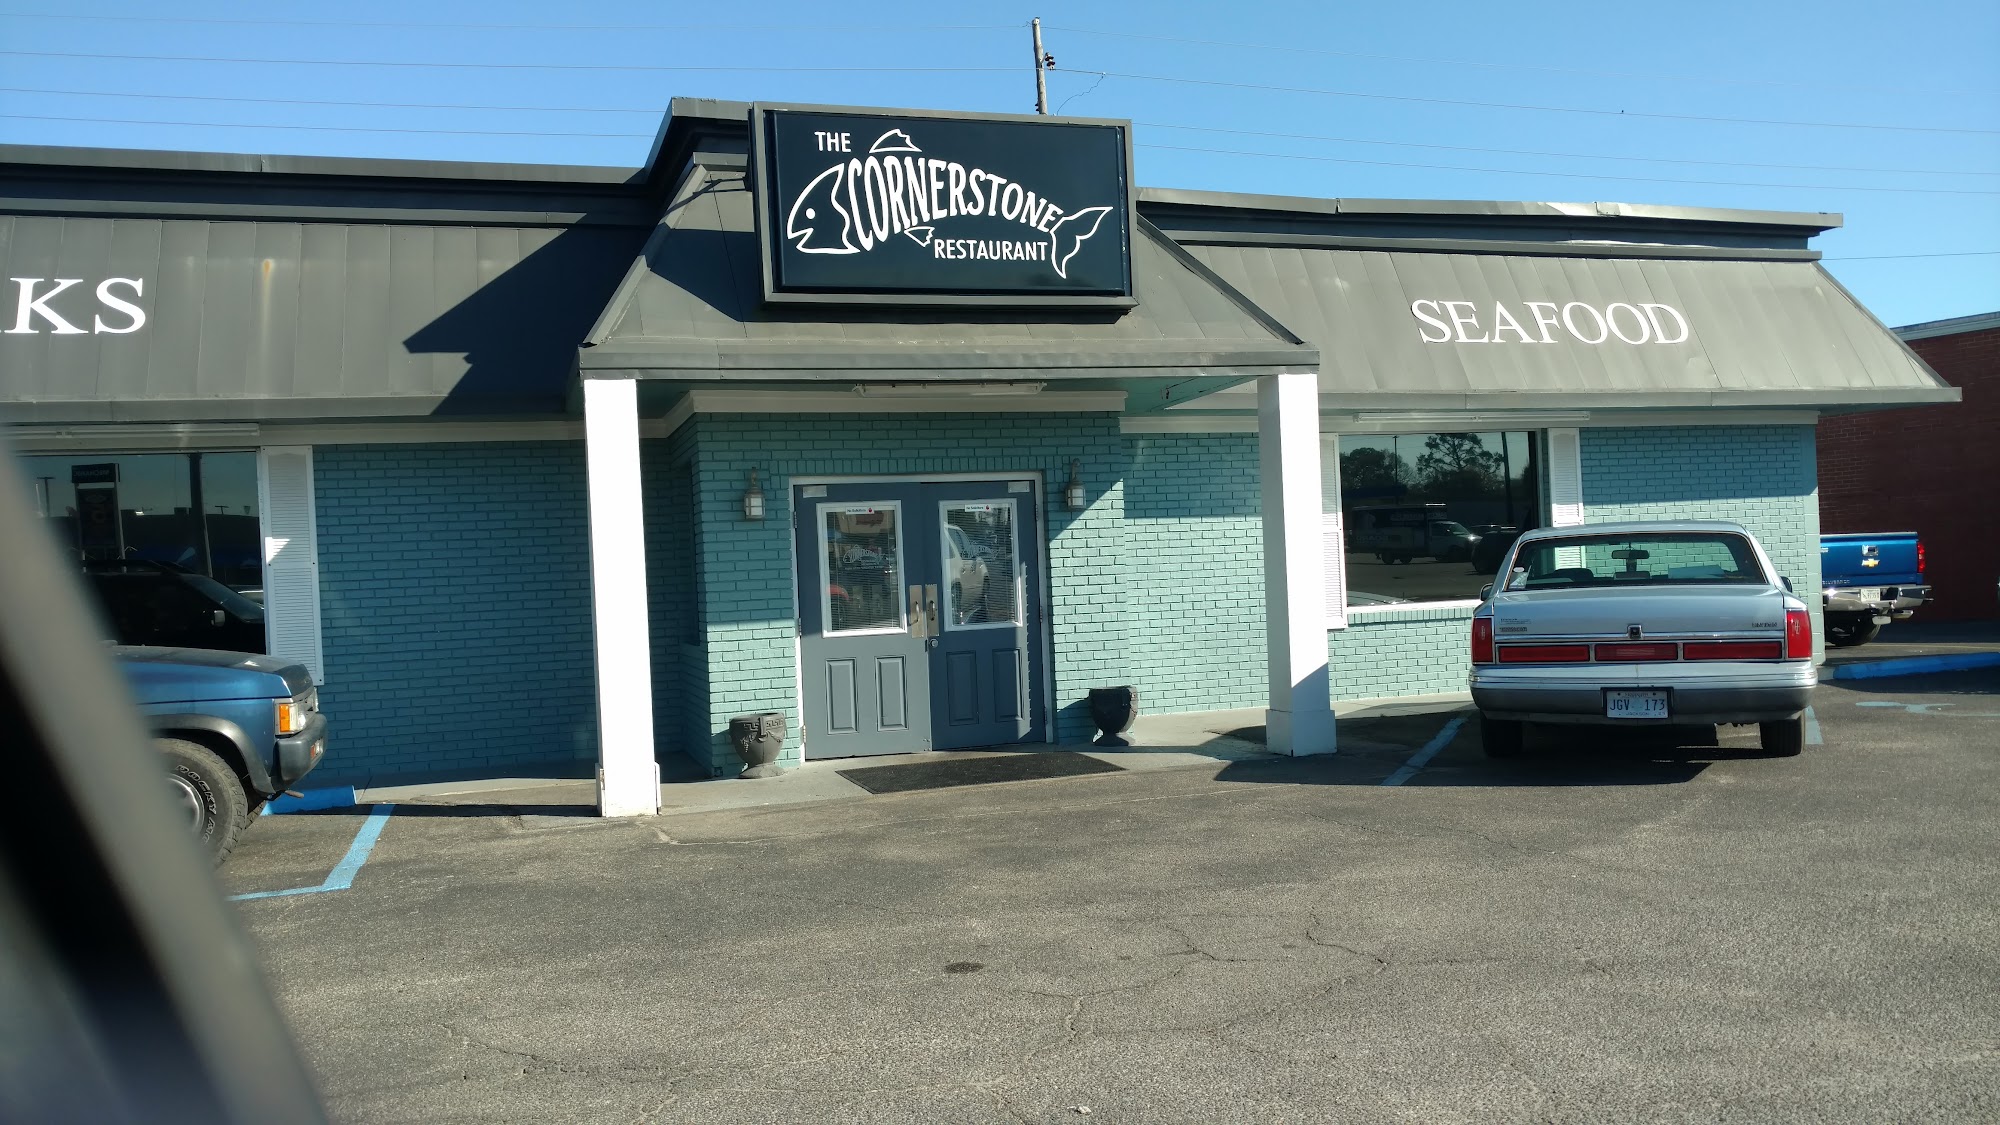 The Cornerstone Restaurant